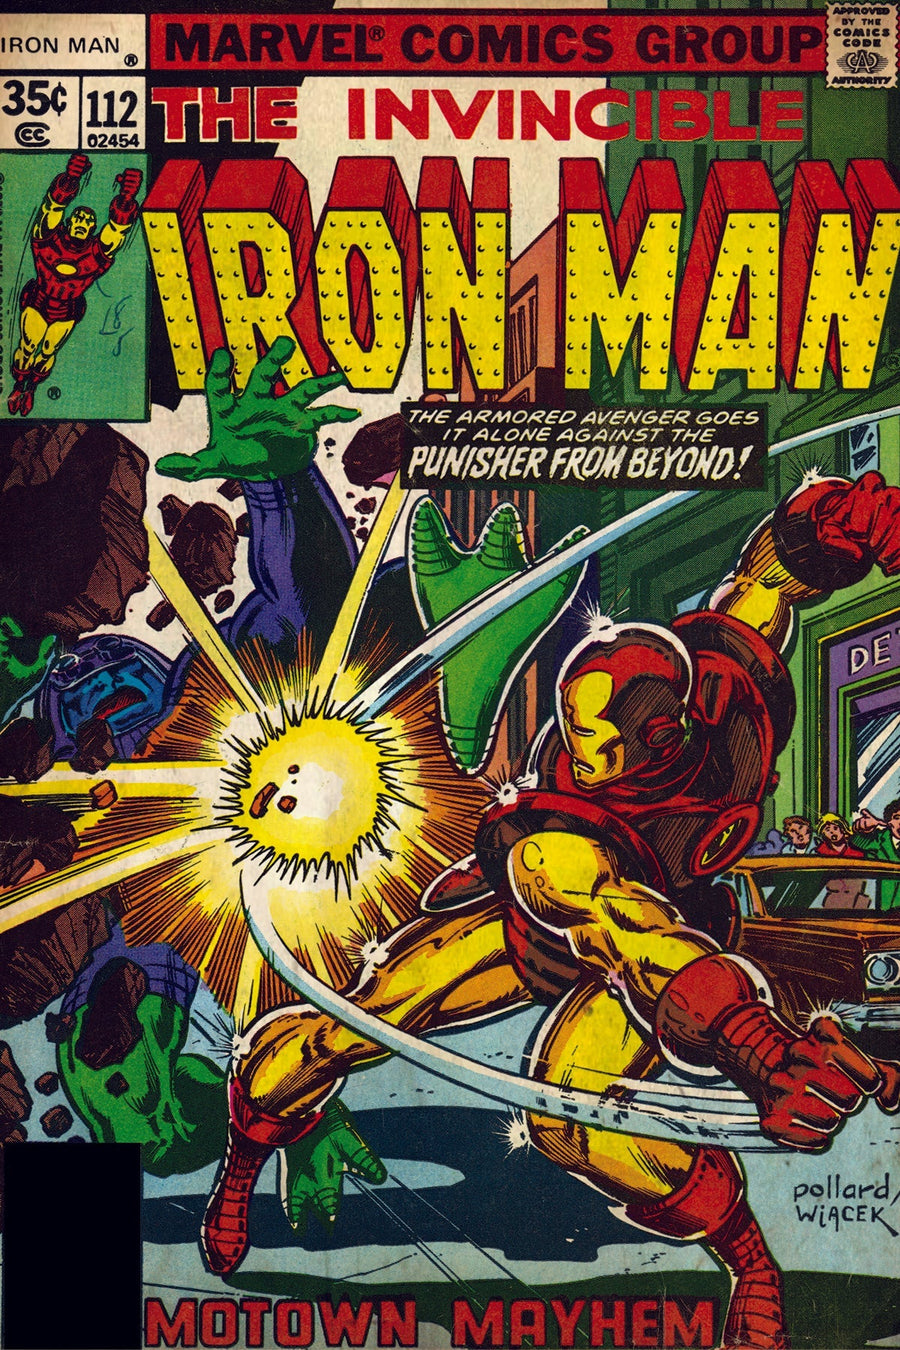 Iron Man Marvel Comics 3D Jigsaw Puzzle 33171 300pc 12x18"